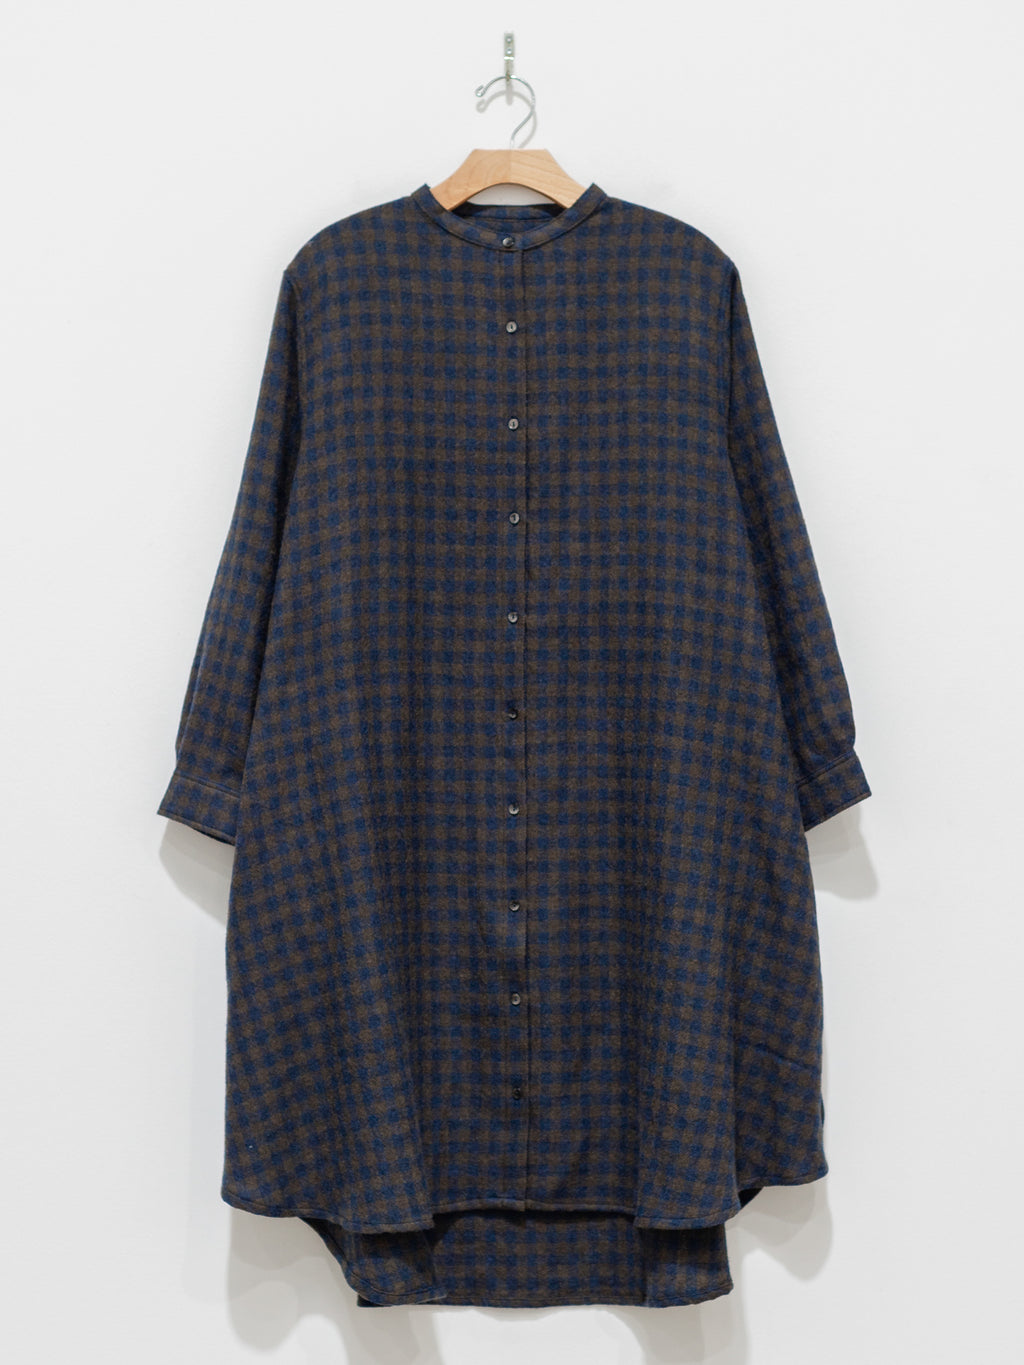 Namu Shop - ICHI Wool Gingham Long Shirt - Navy x Brown